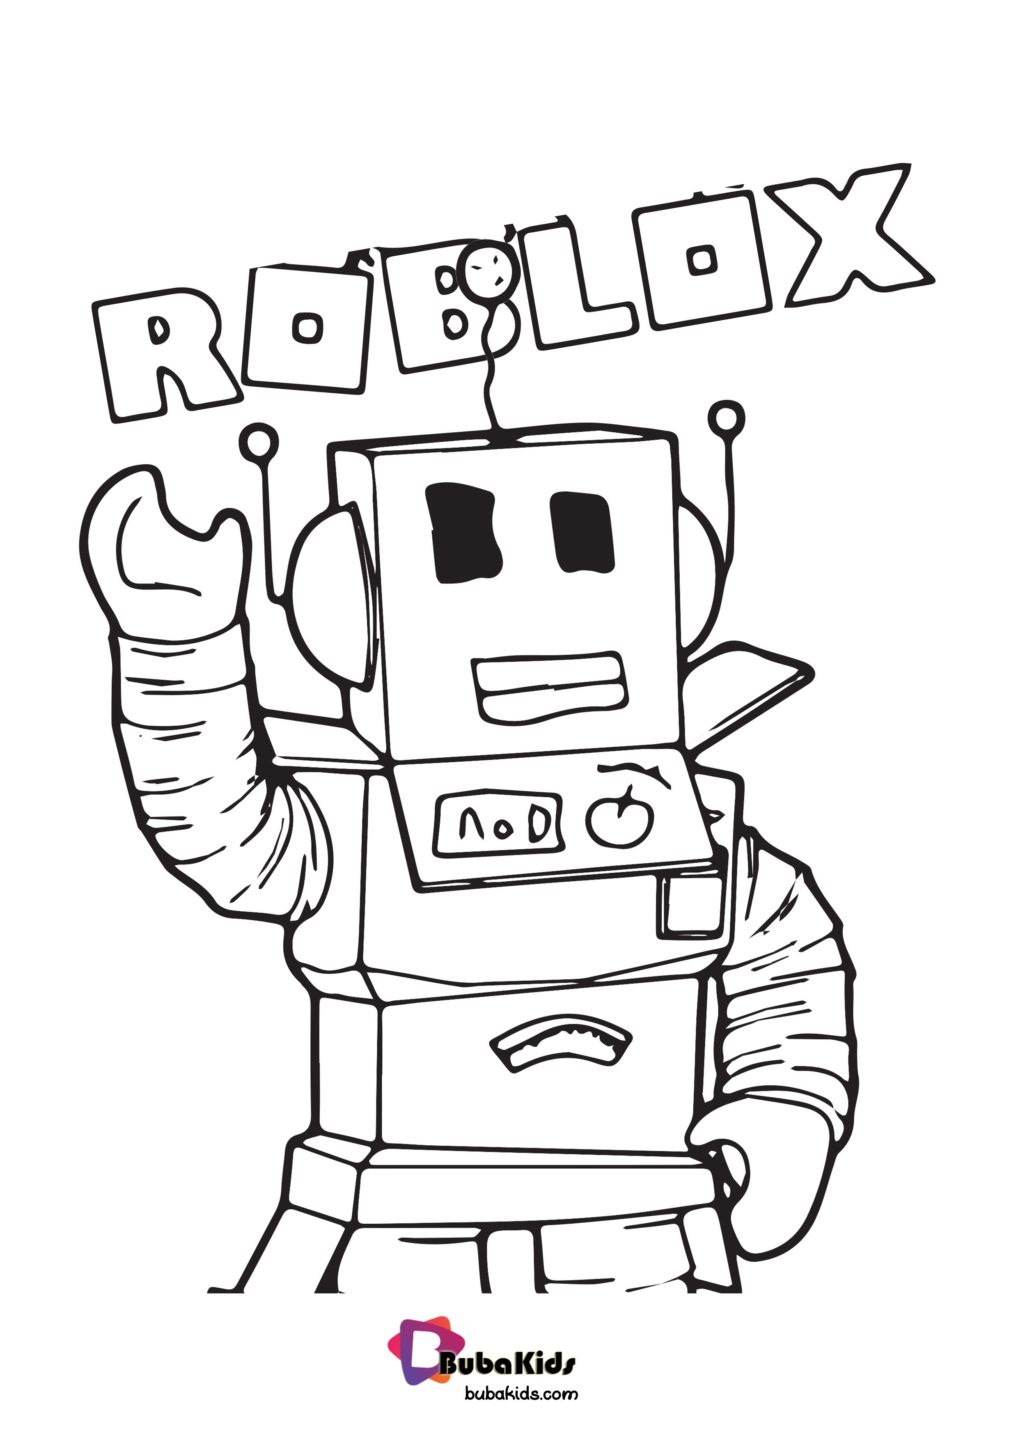 Roblox Coloring Page | BubaKids.com